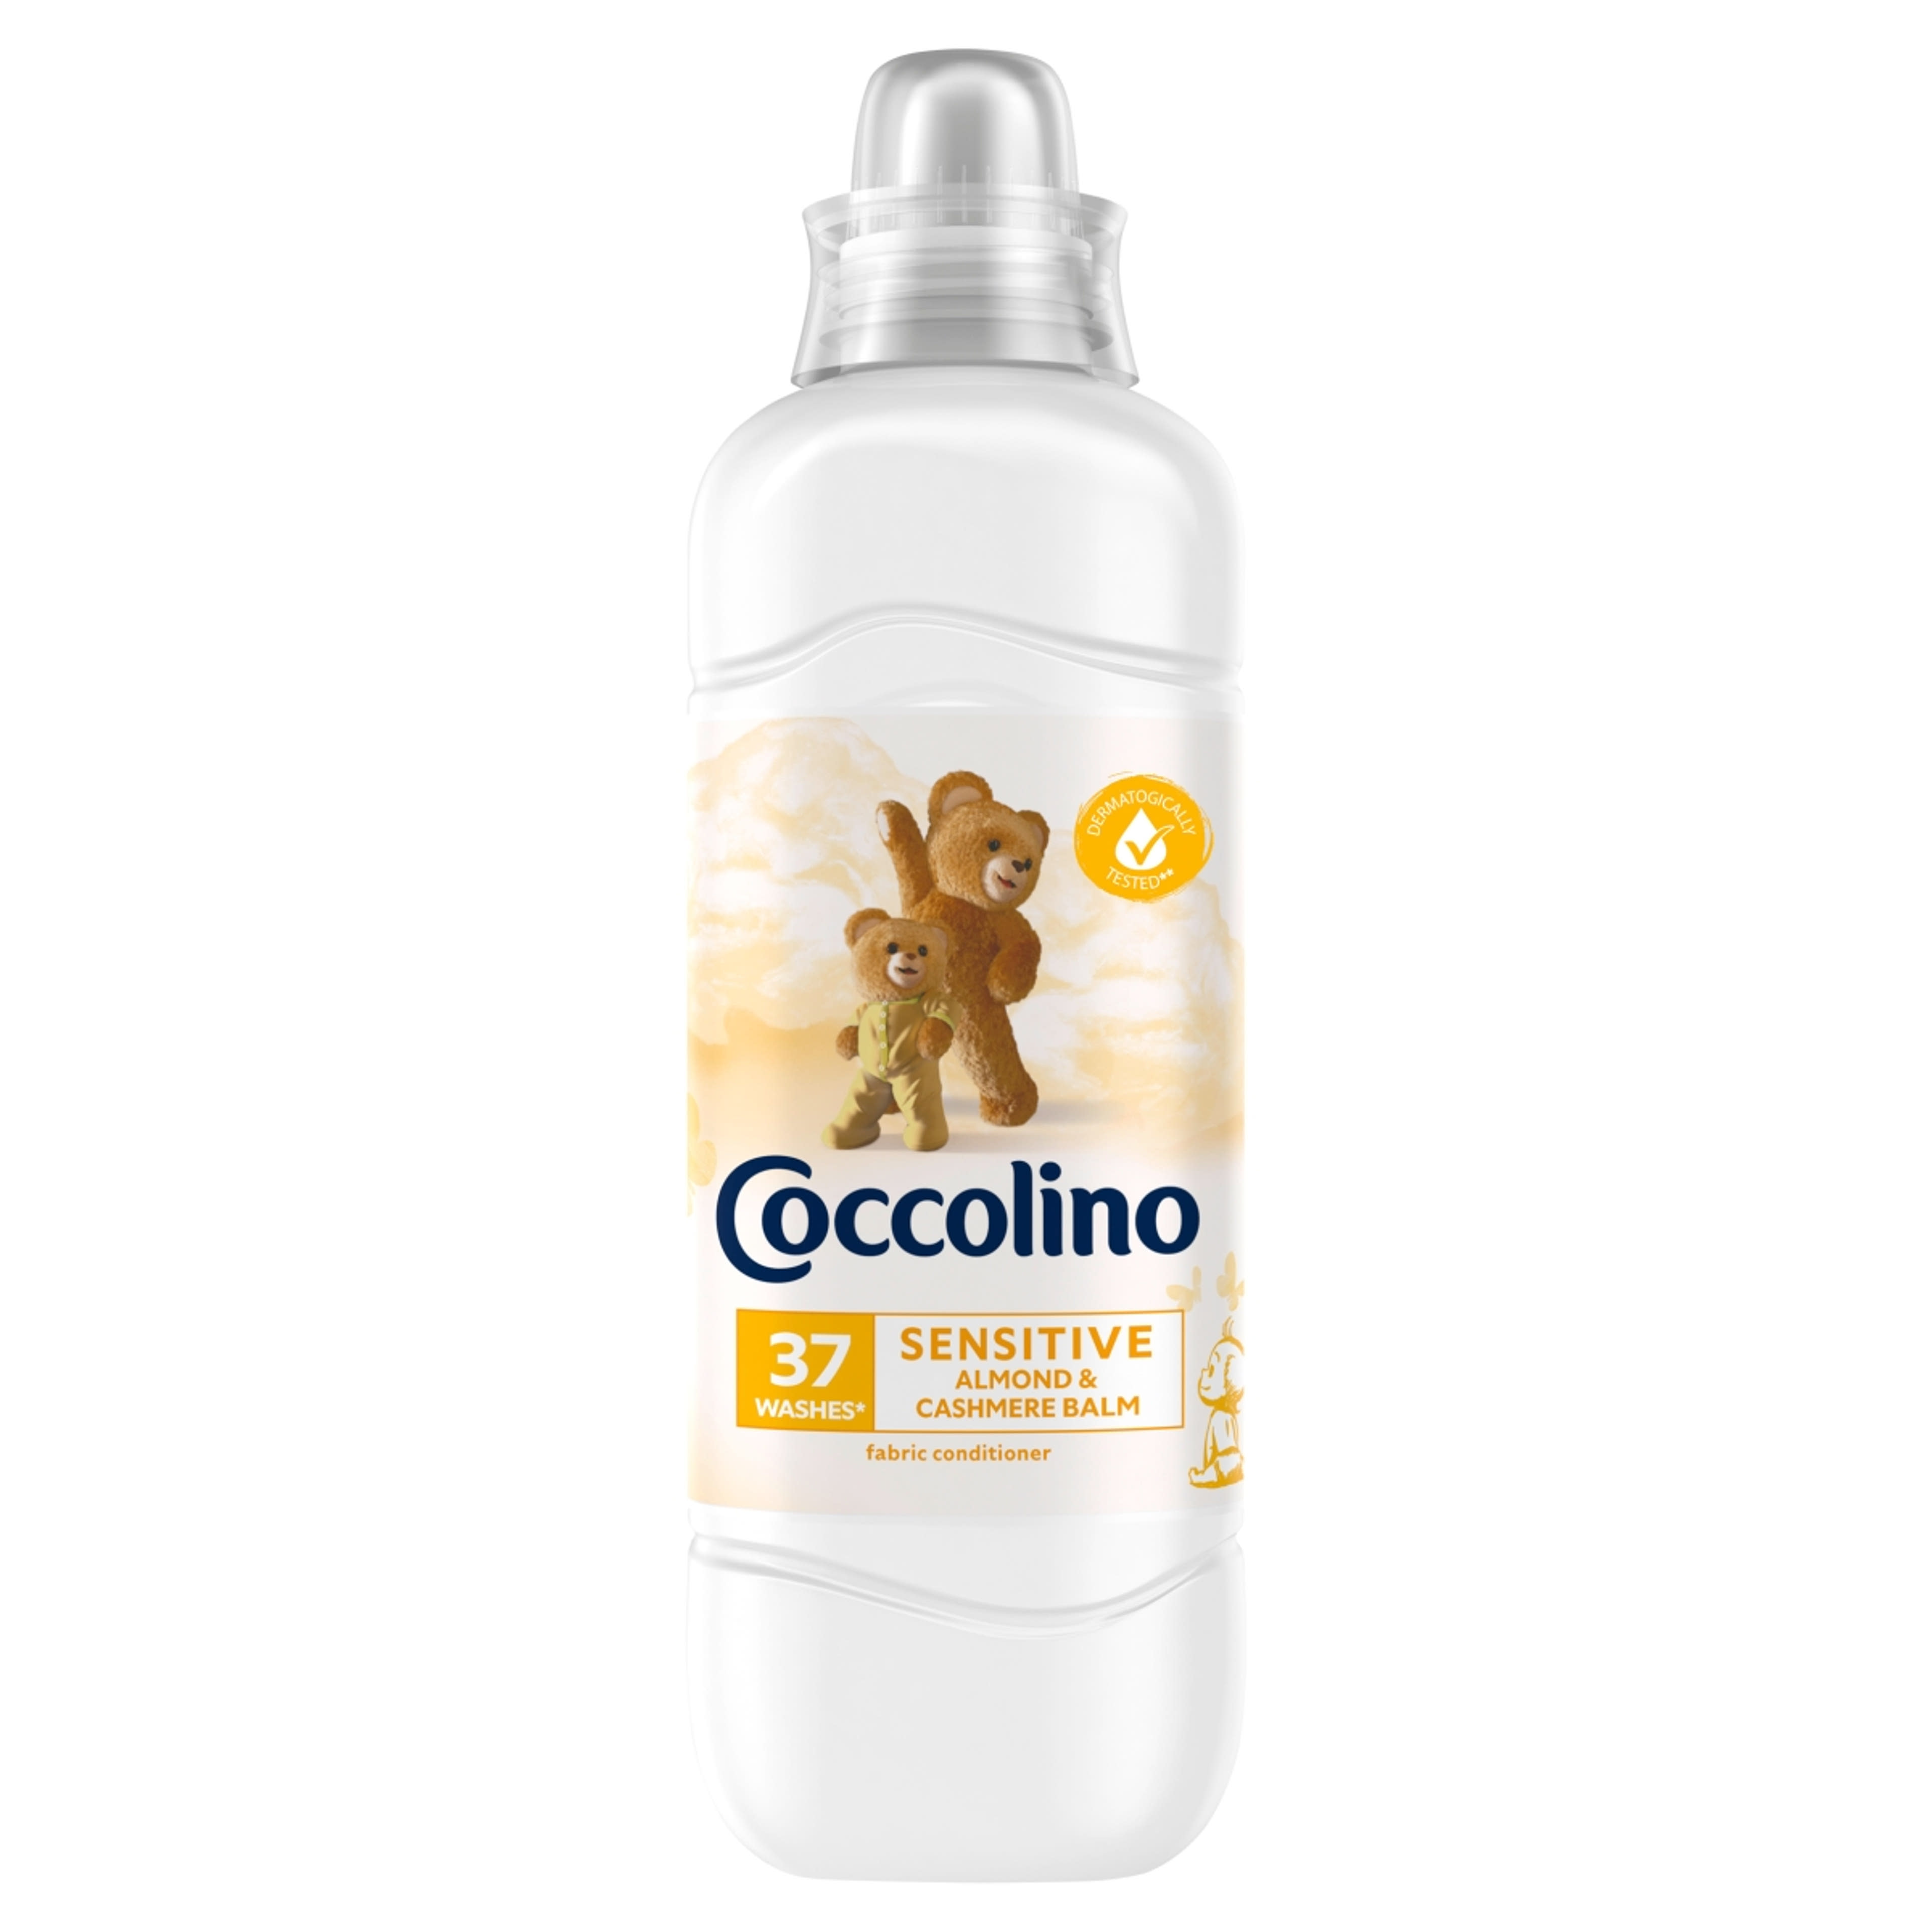 Coccolino Sensitive Almond & Cashmere Balm öblítőkoncentrátum 37 mosás - 925 ml